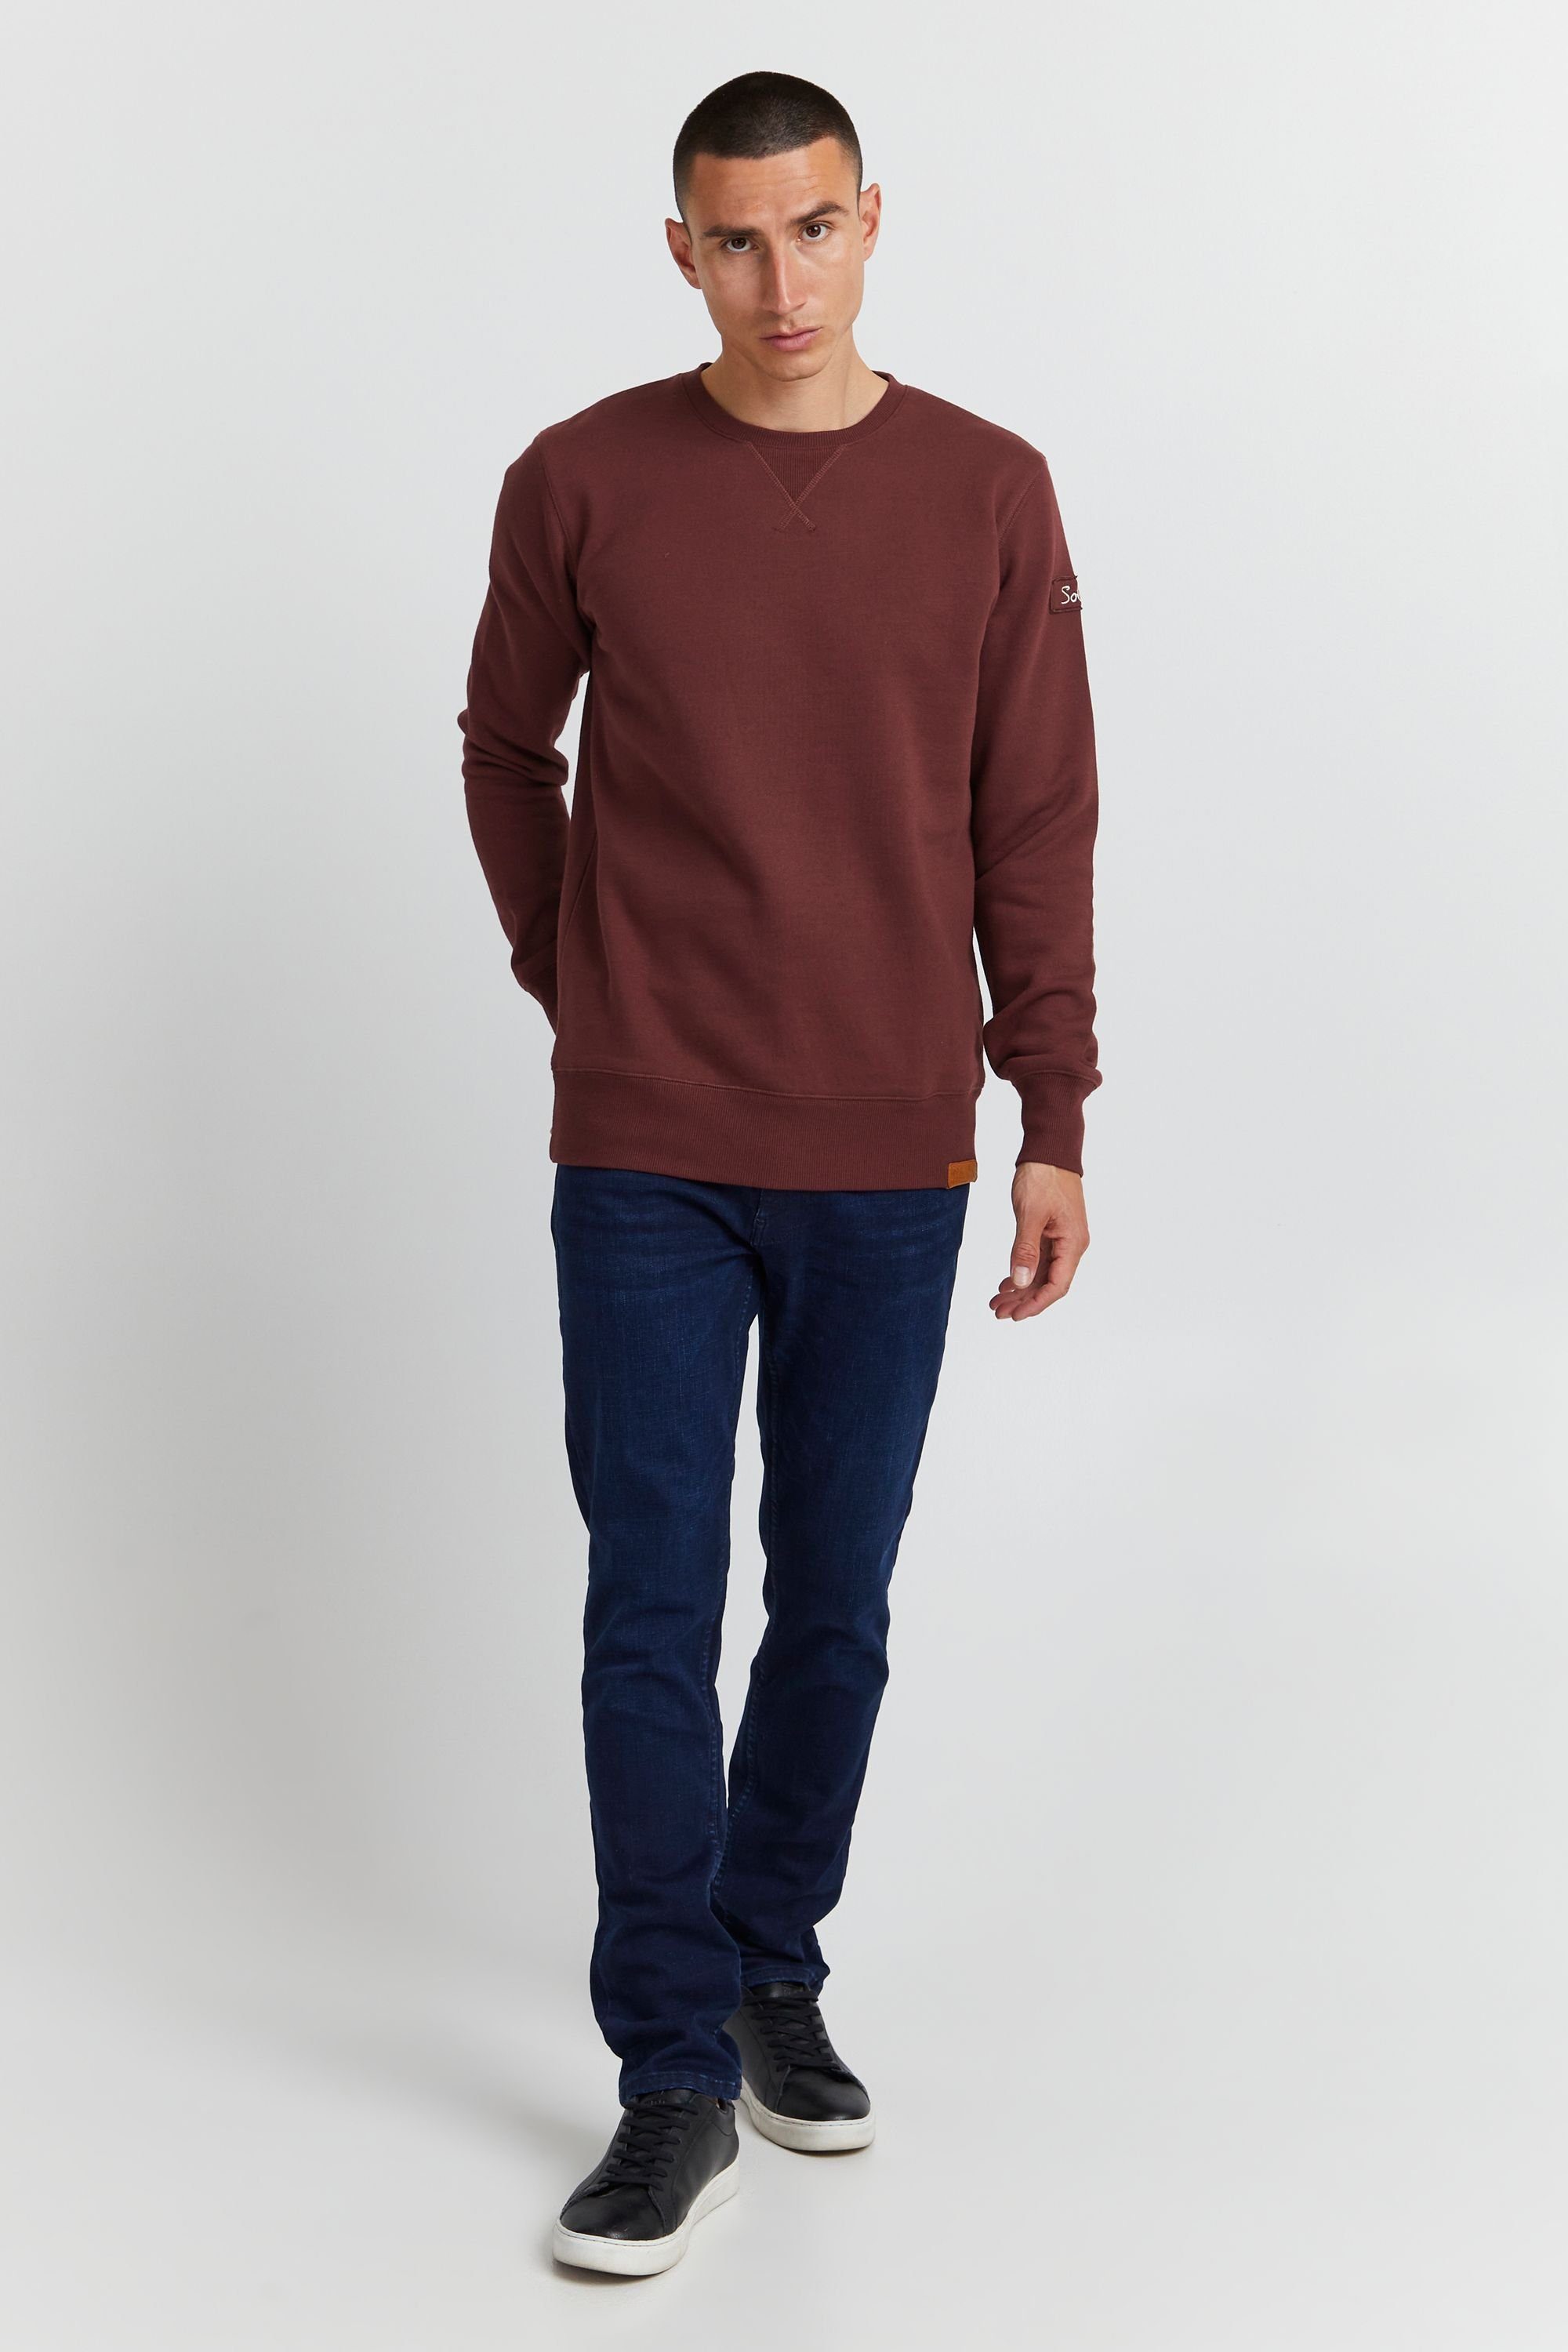 !Solid Sweatshirt O-Neck RED (790985) WINE SDTrip